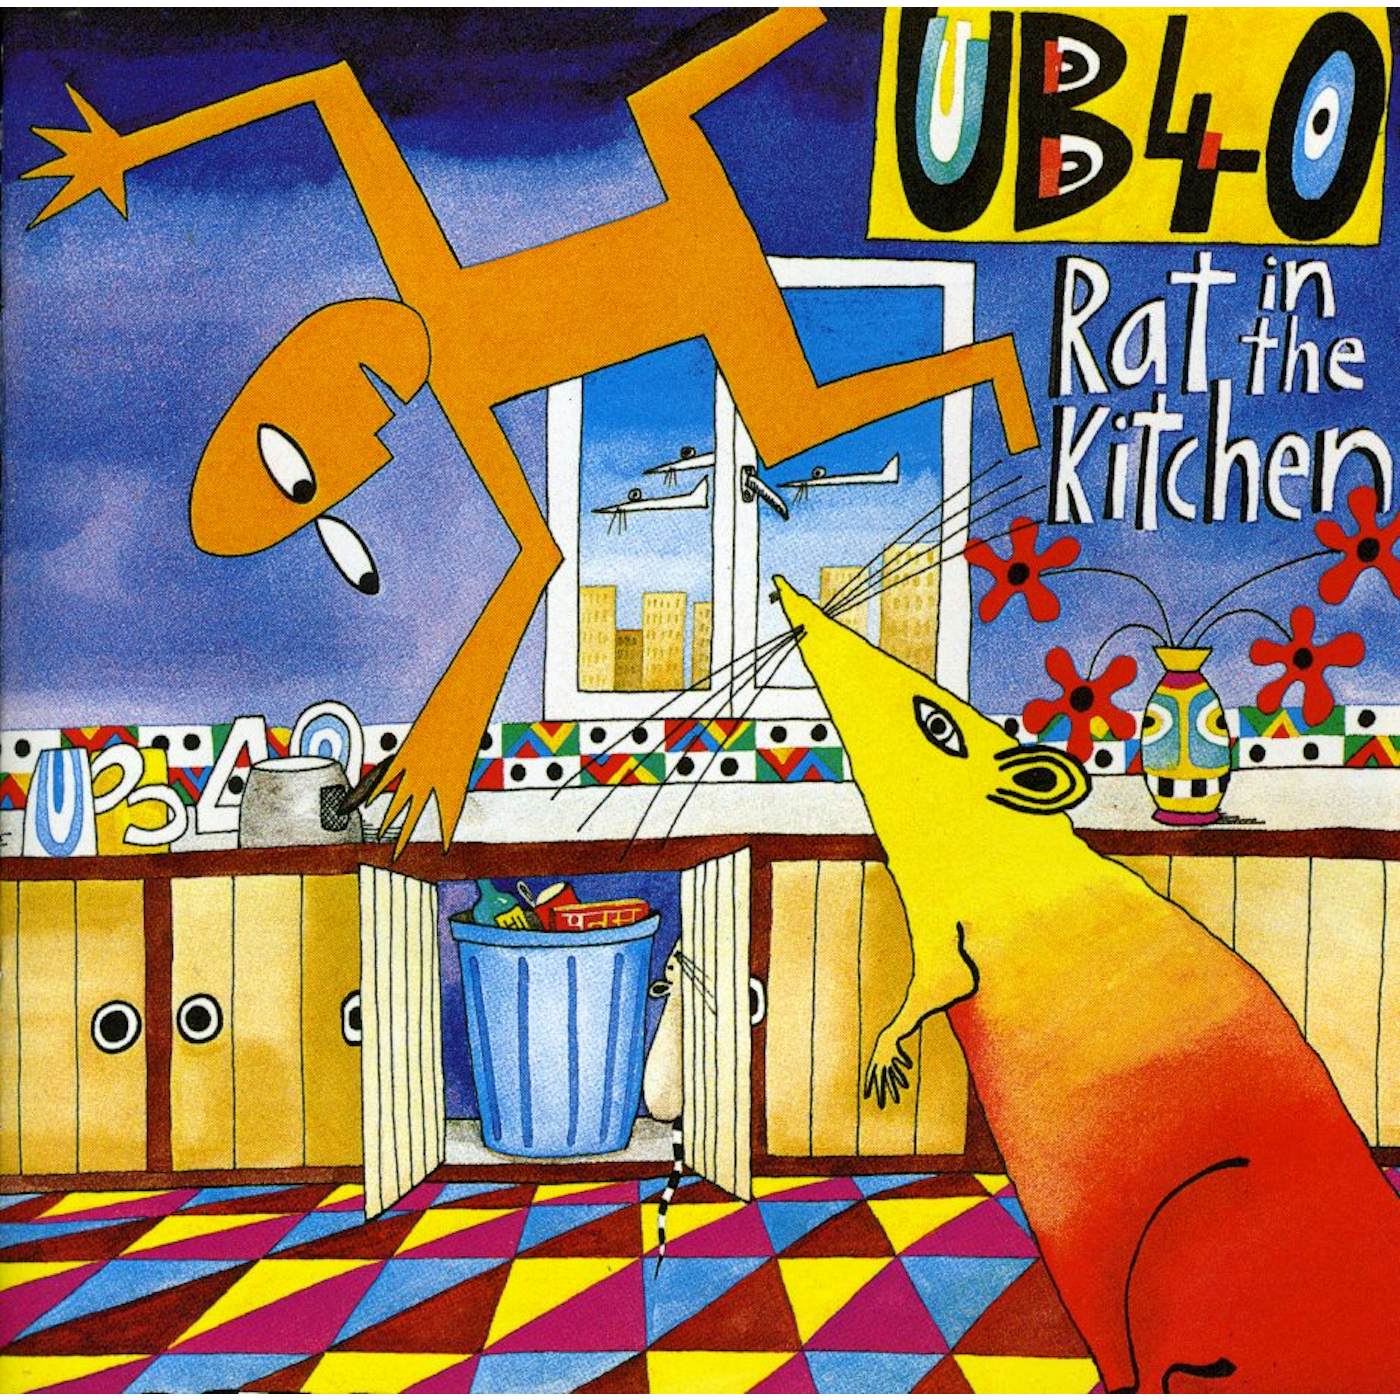 UB40 RAT IN THE KITCHEN CD